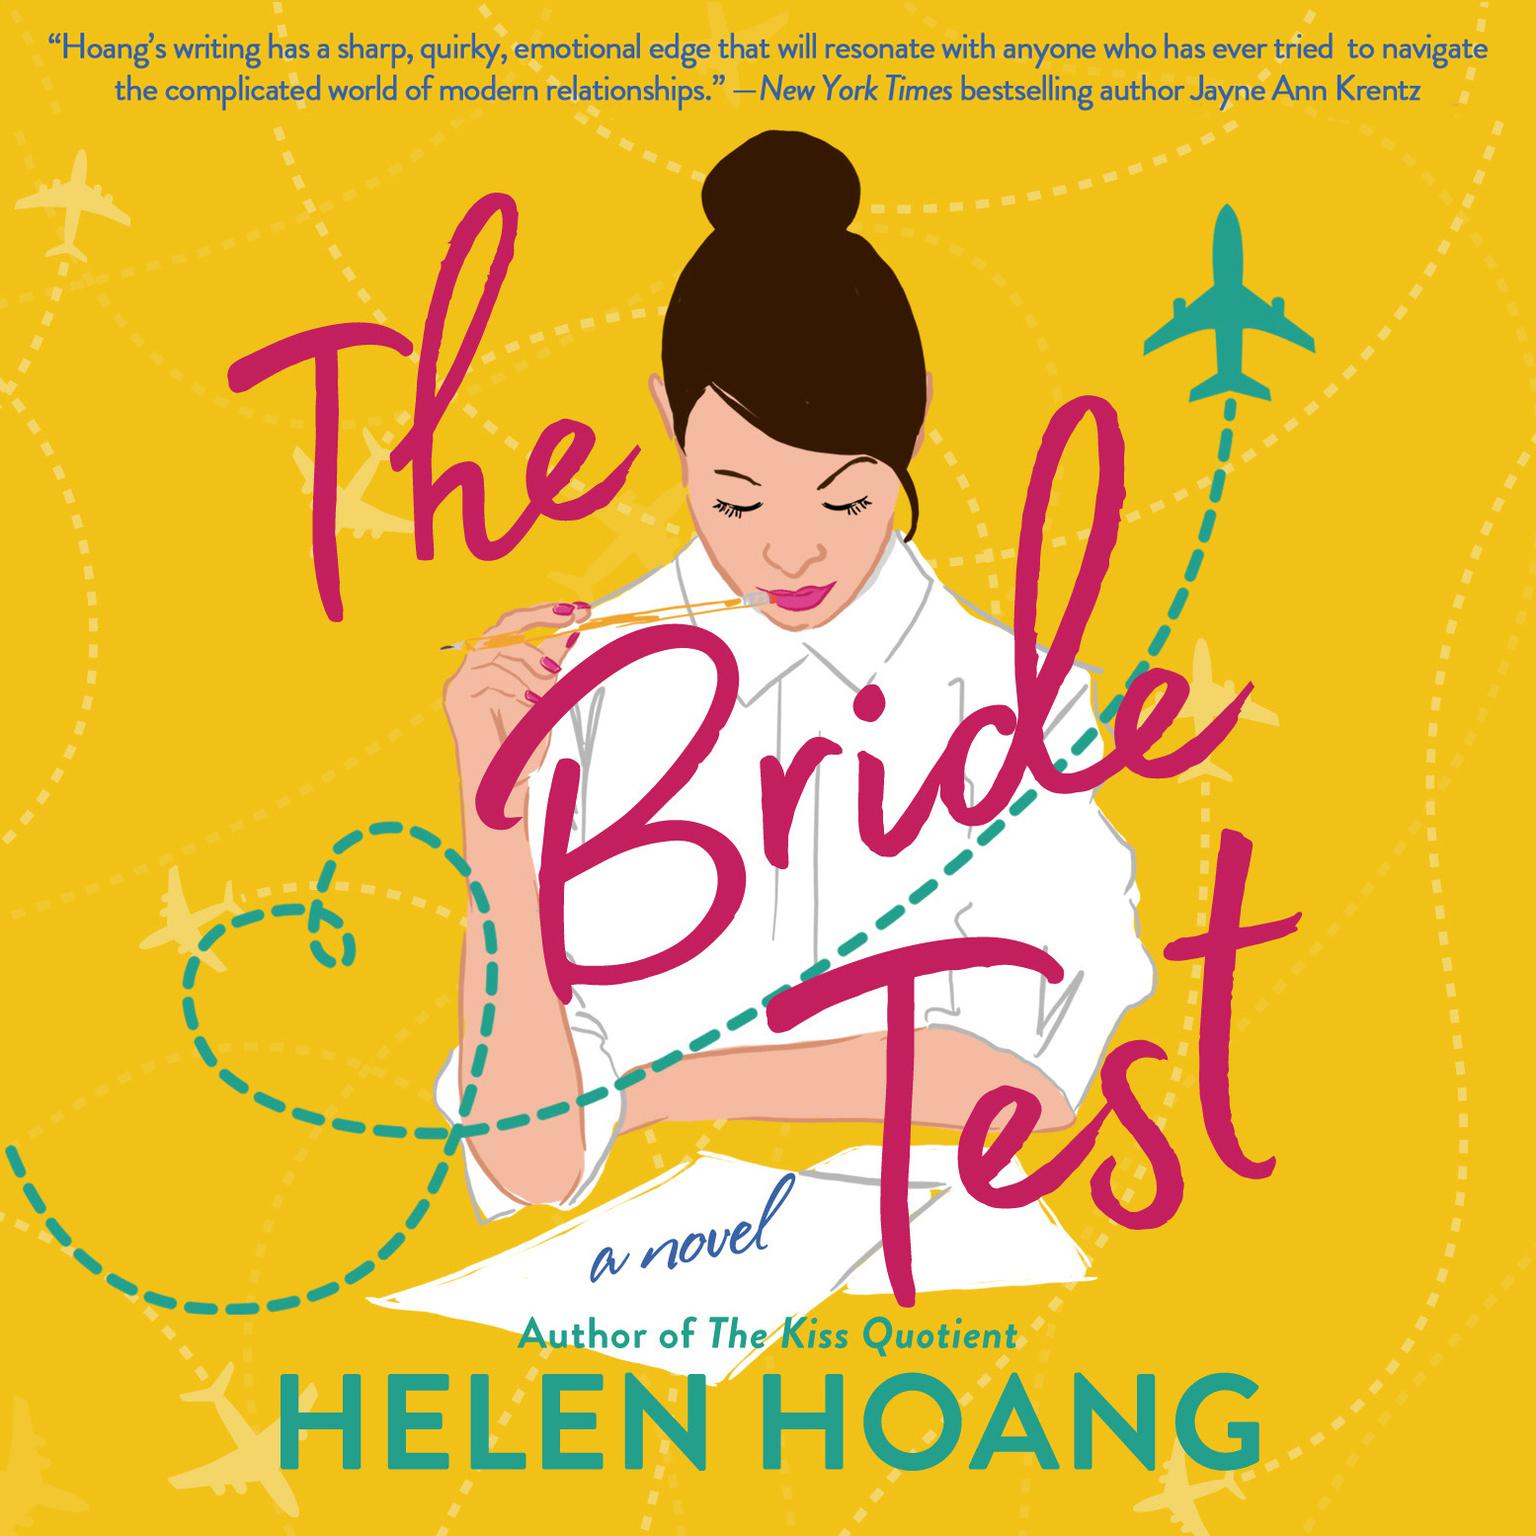 Helen Hoang, Emily Woo Zeller: The Bride Test (AudiobookFormat, 2019, Dreamscape Media)